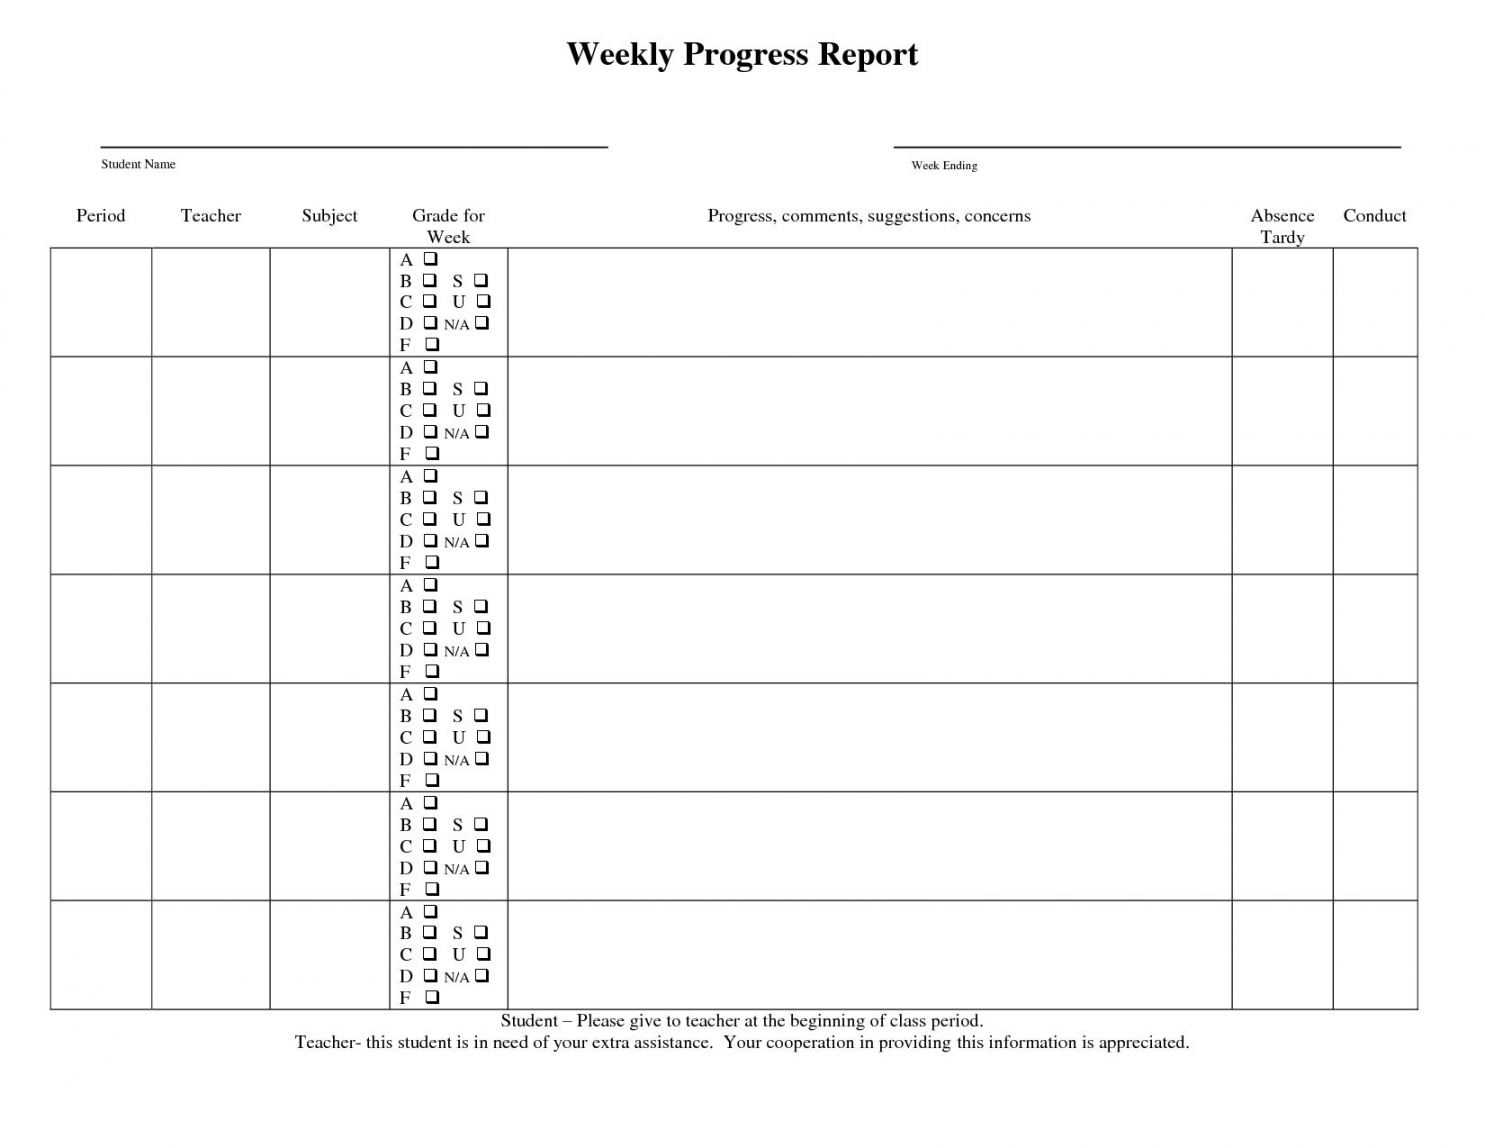 Daily Progress Report Format Excel Construction Glendale In High School Progress Report Template